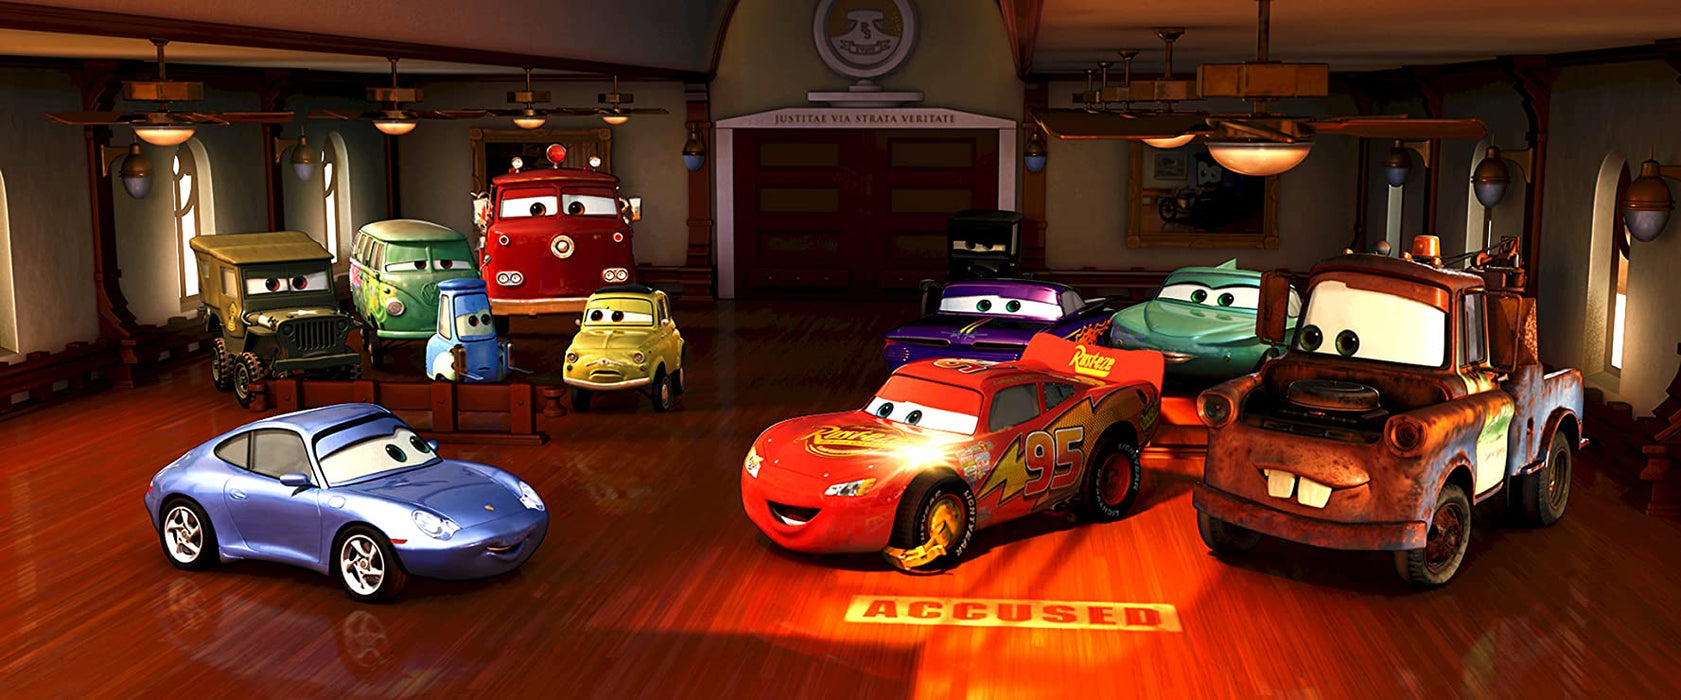 Disney Pixar's Cars [Blu-ray + DVD + Digital]